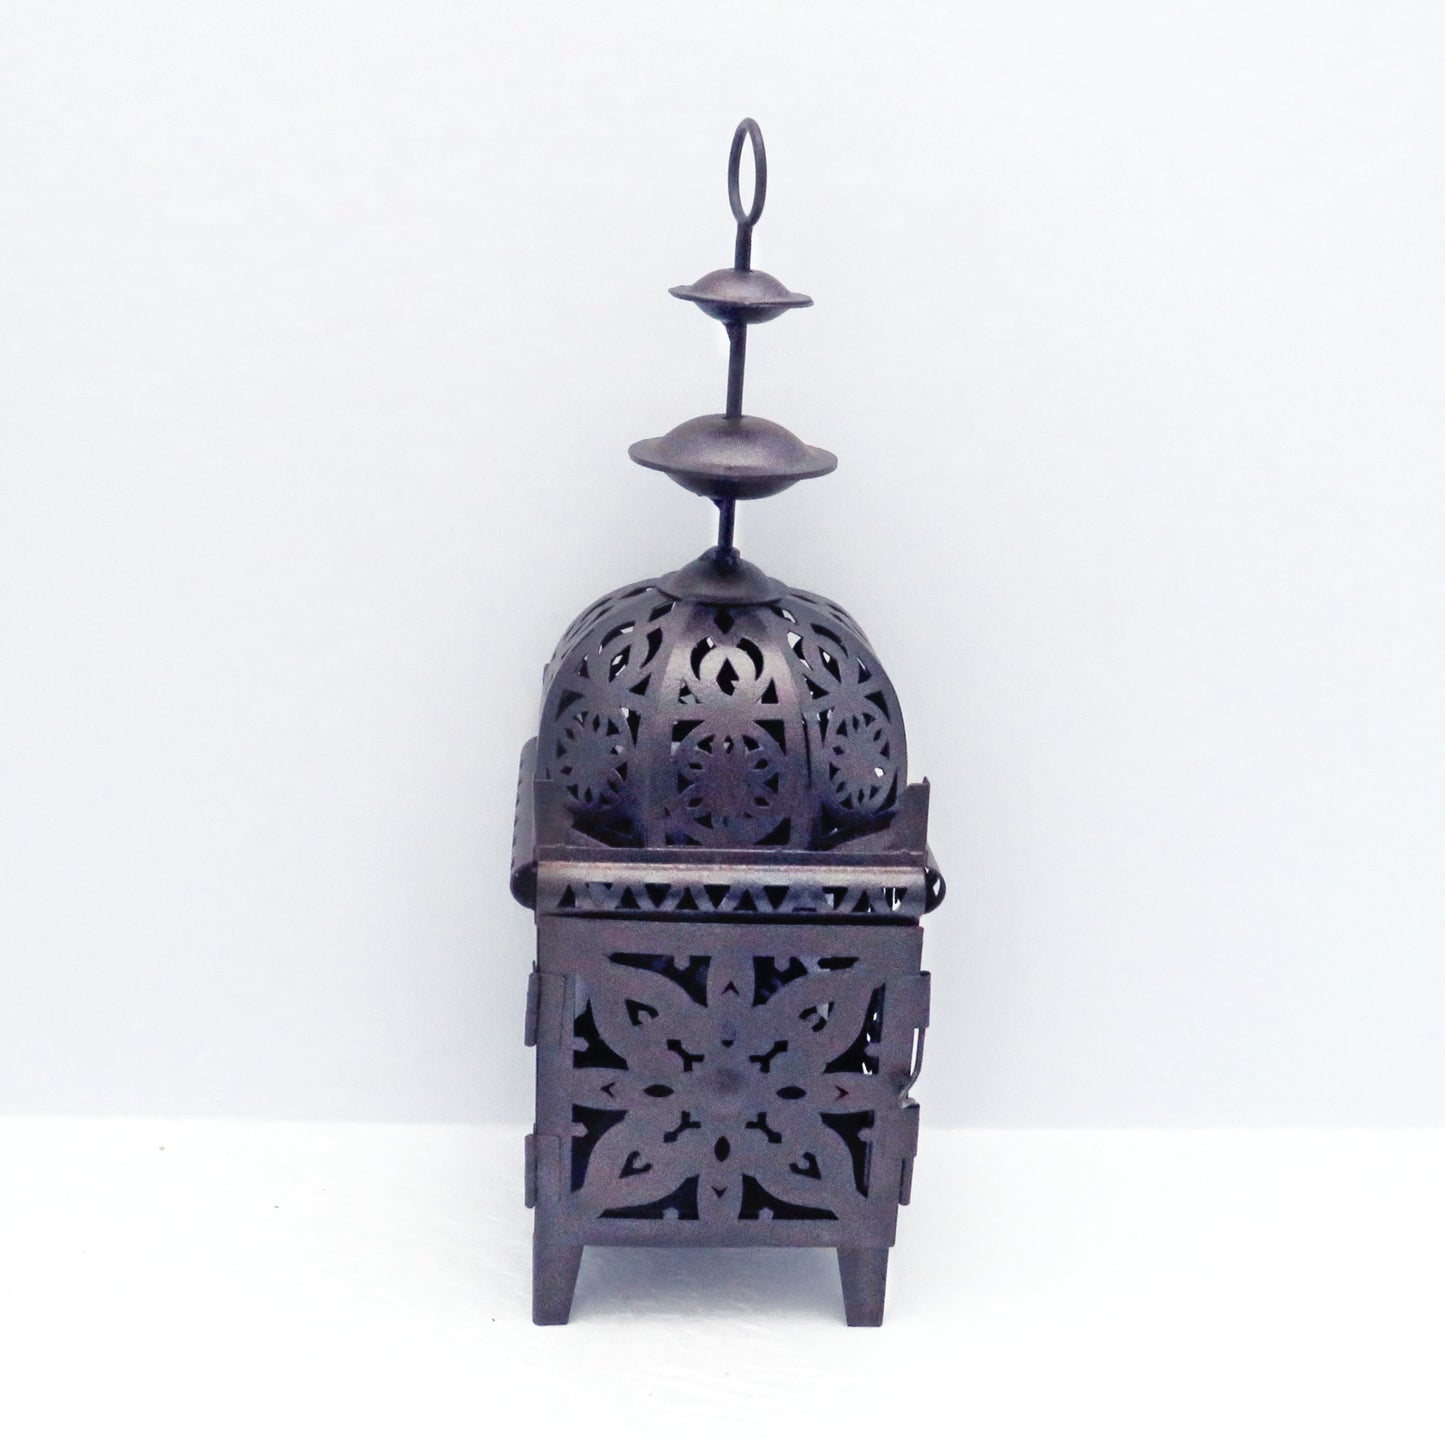 Vintage Brown Metallic Votive Candle Holder With Door and Metallic Carvings / Vintage Decor / Candle Lover Gift / Hanging Votive Holder